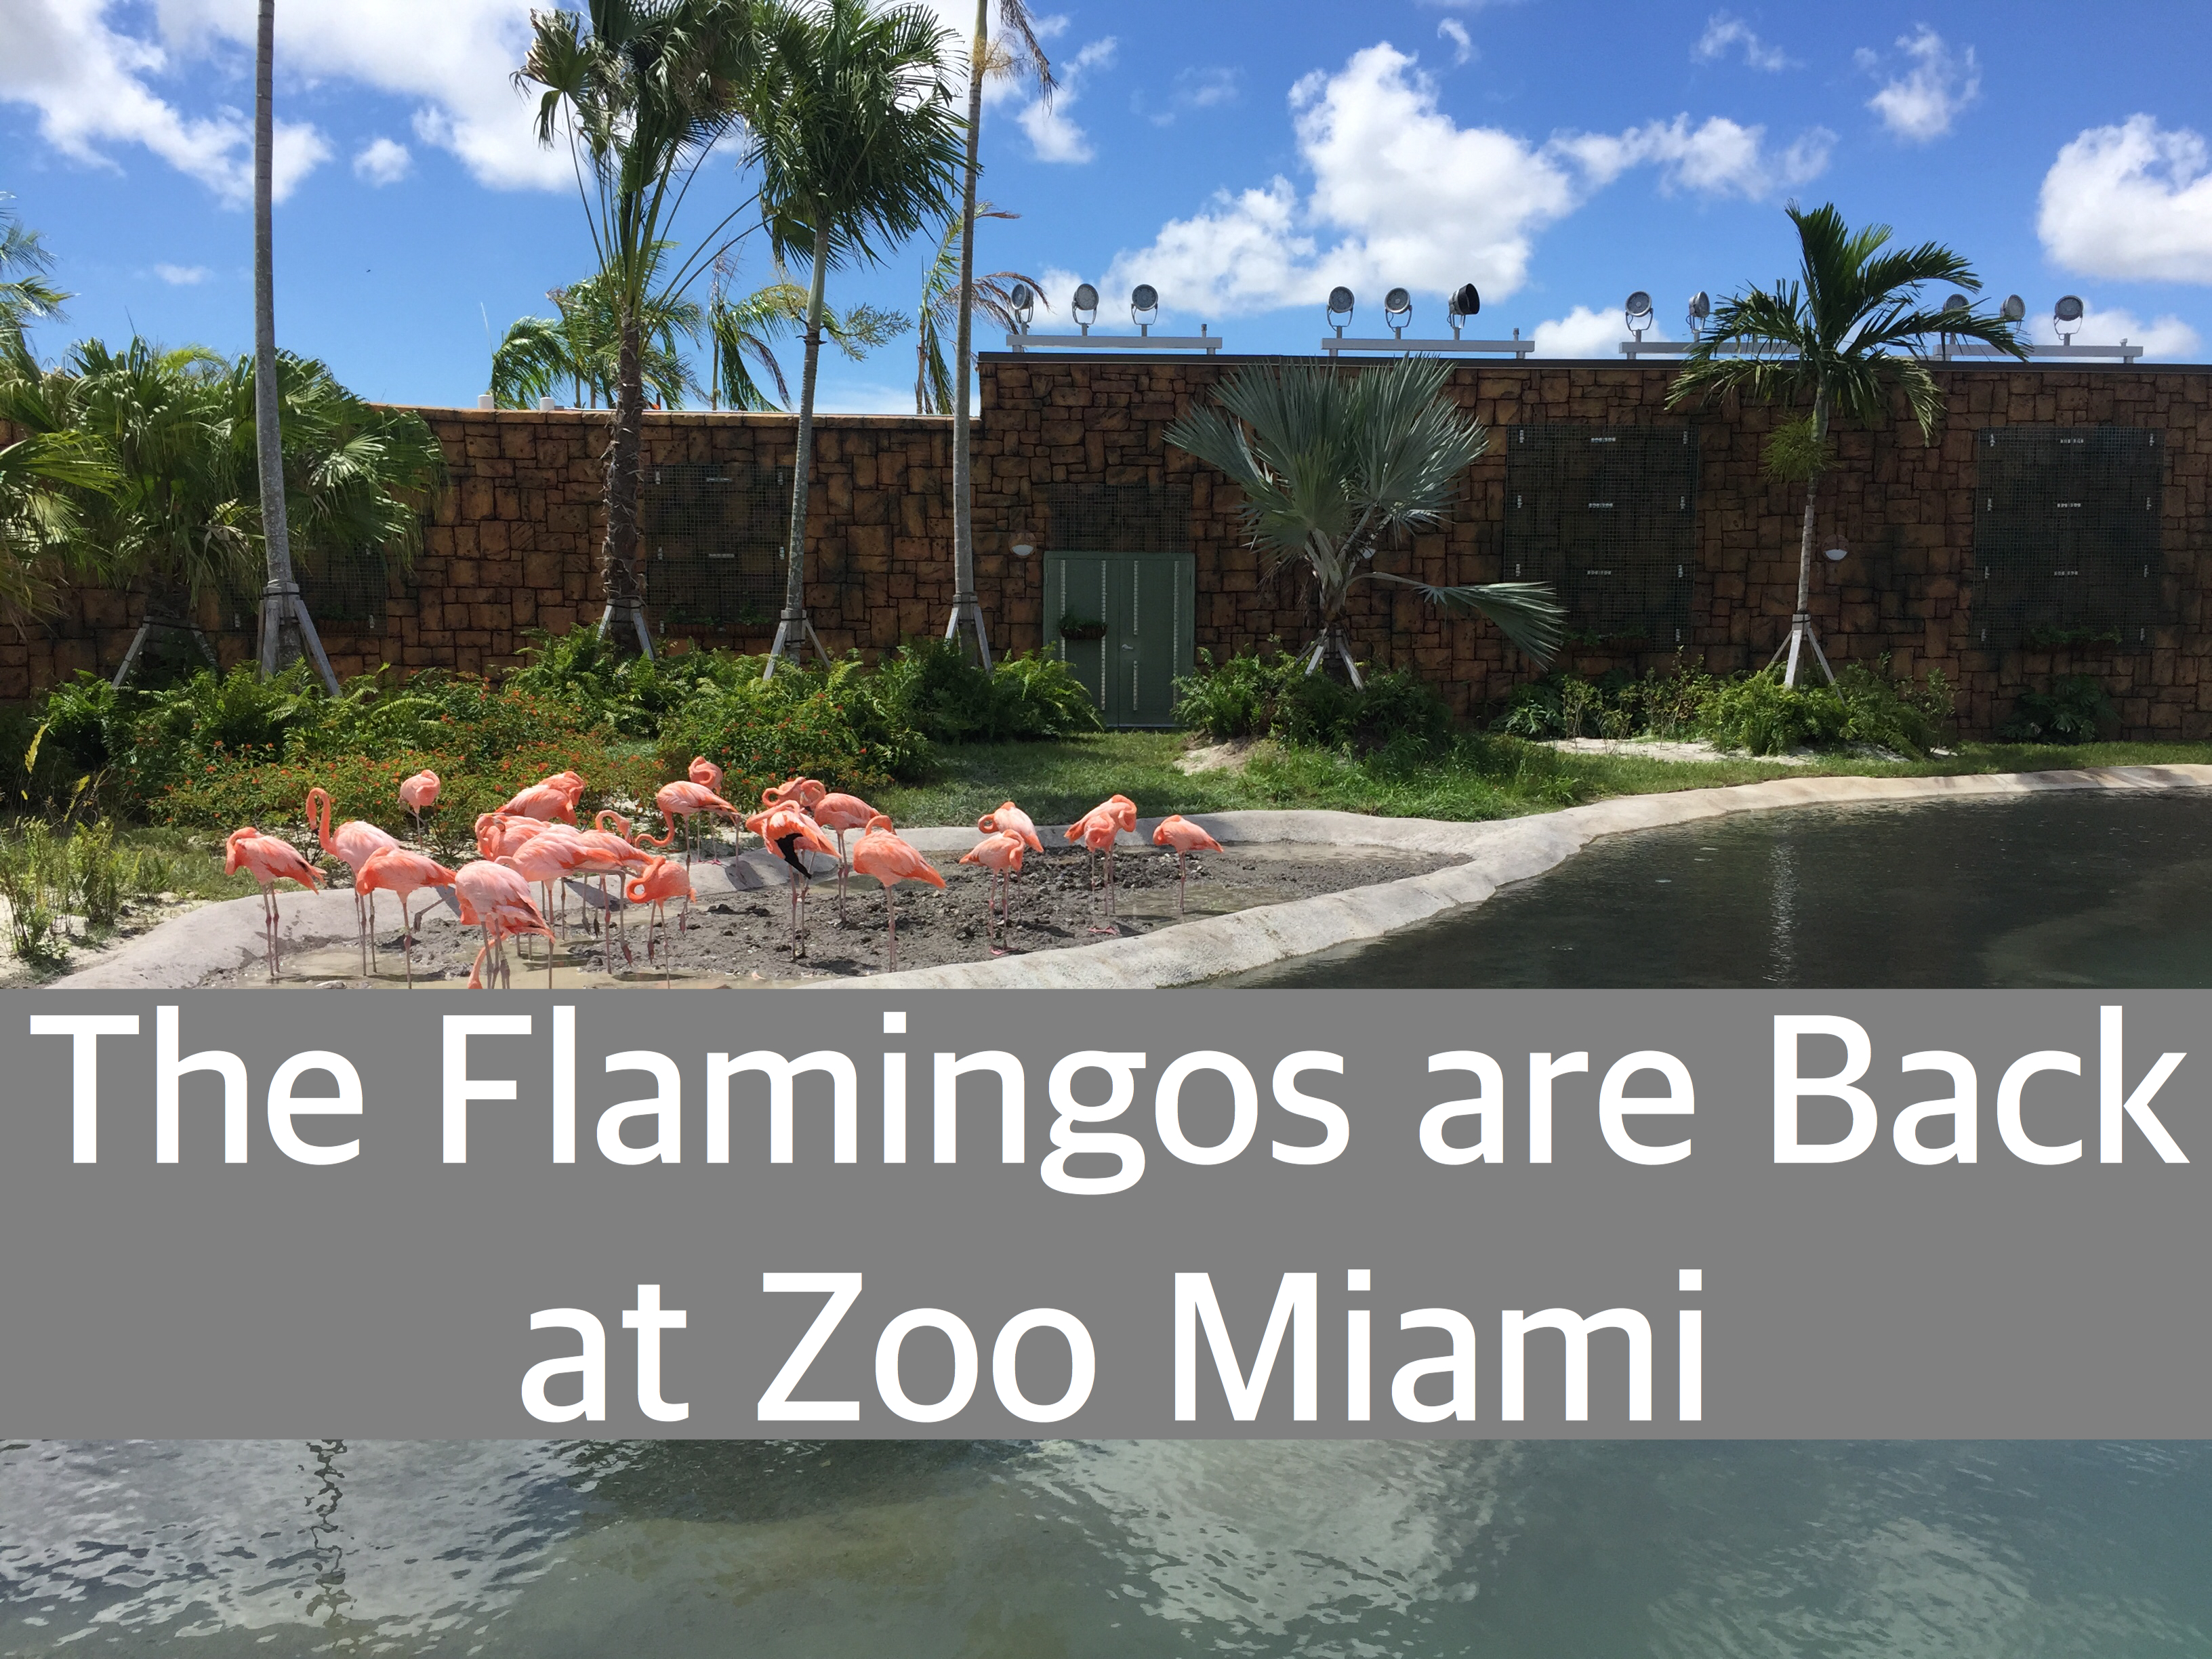 Flamingos are Back at Zoo Miami by Happy Family Blog